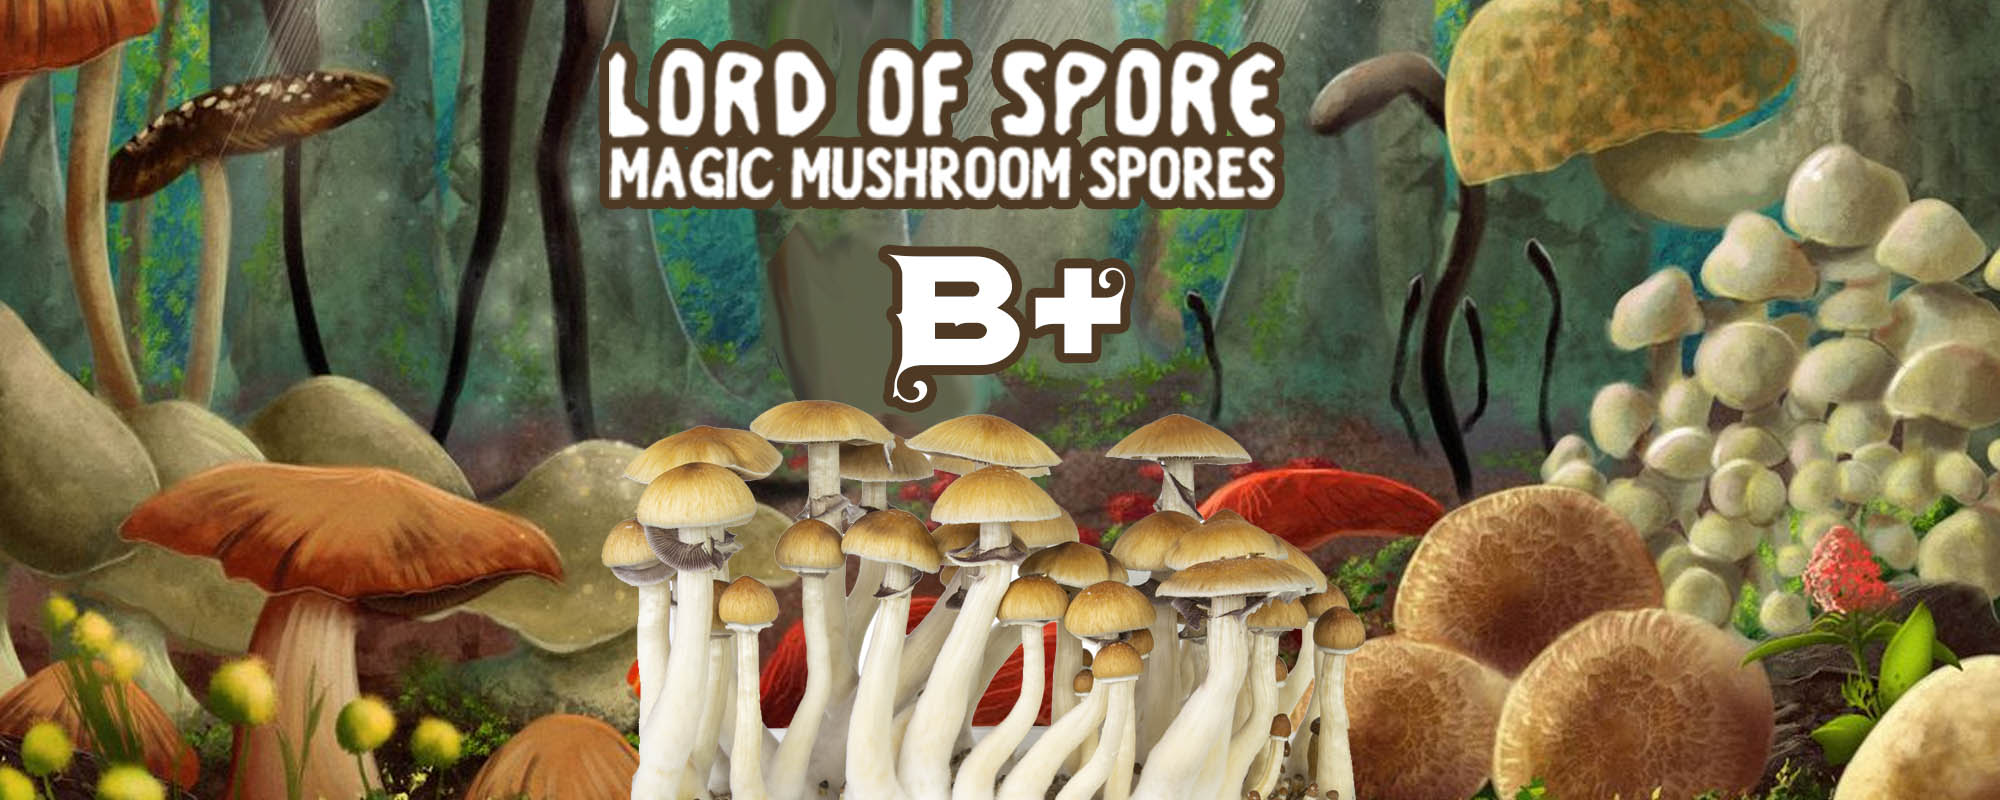 Magic Mushroom Spores - B+ Lore of Spore